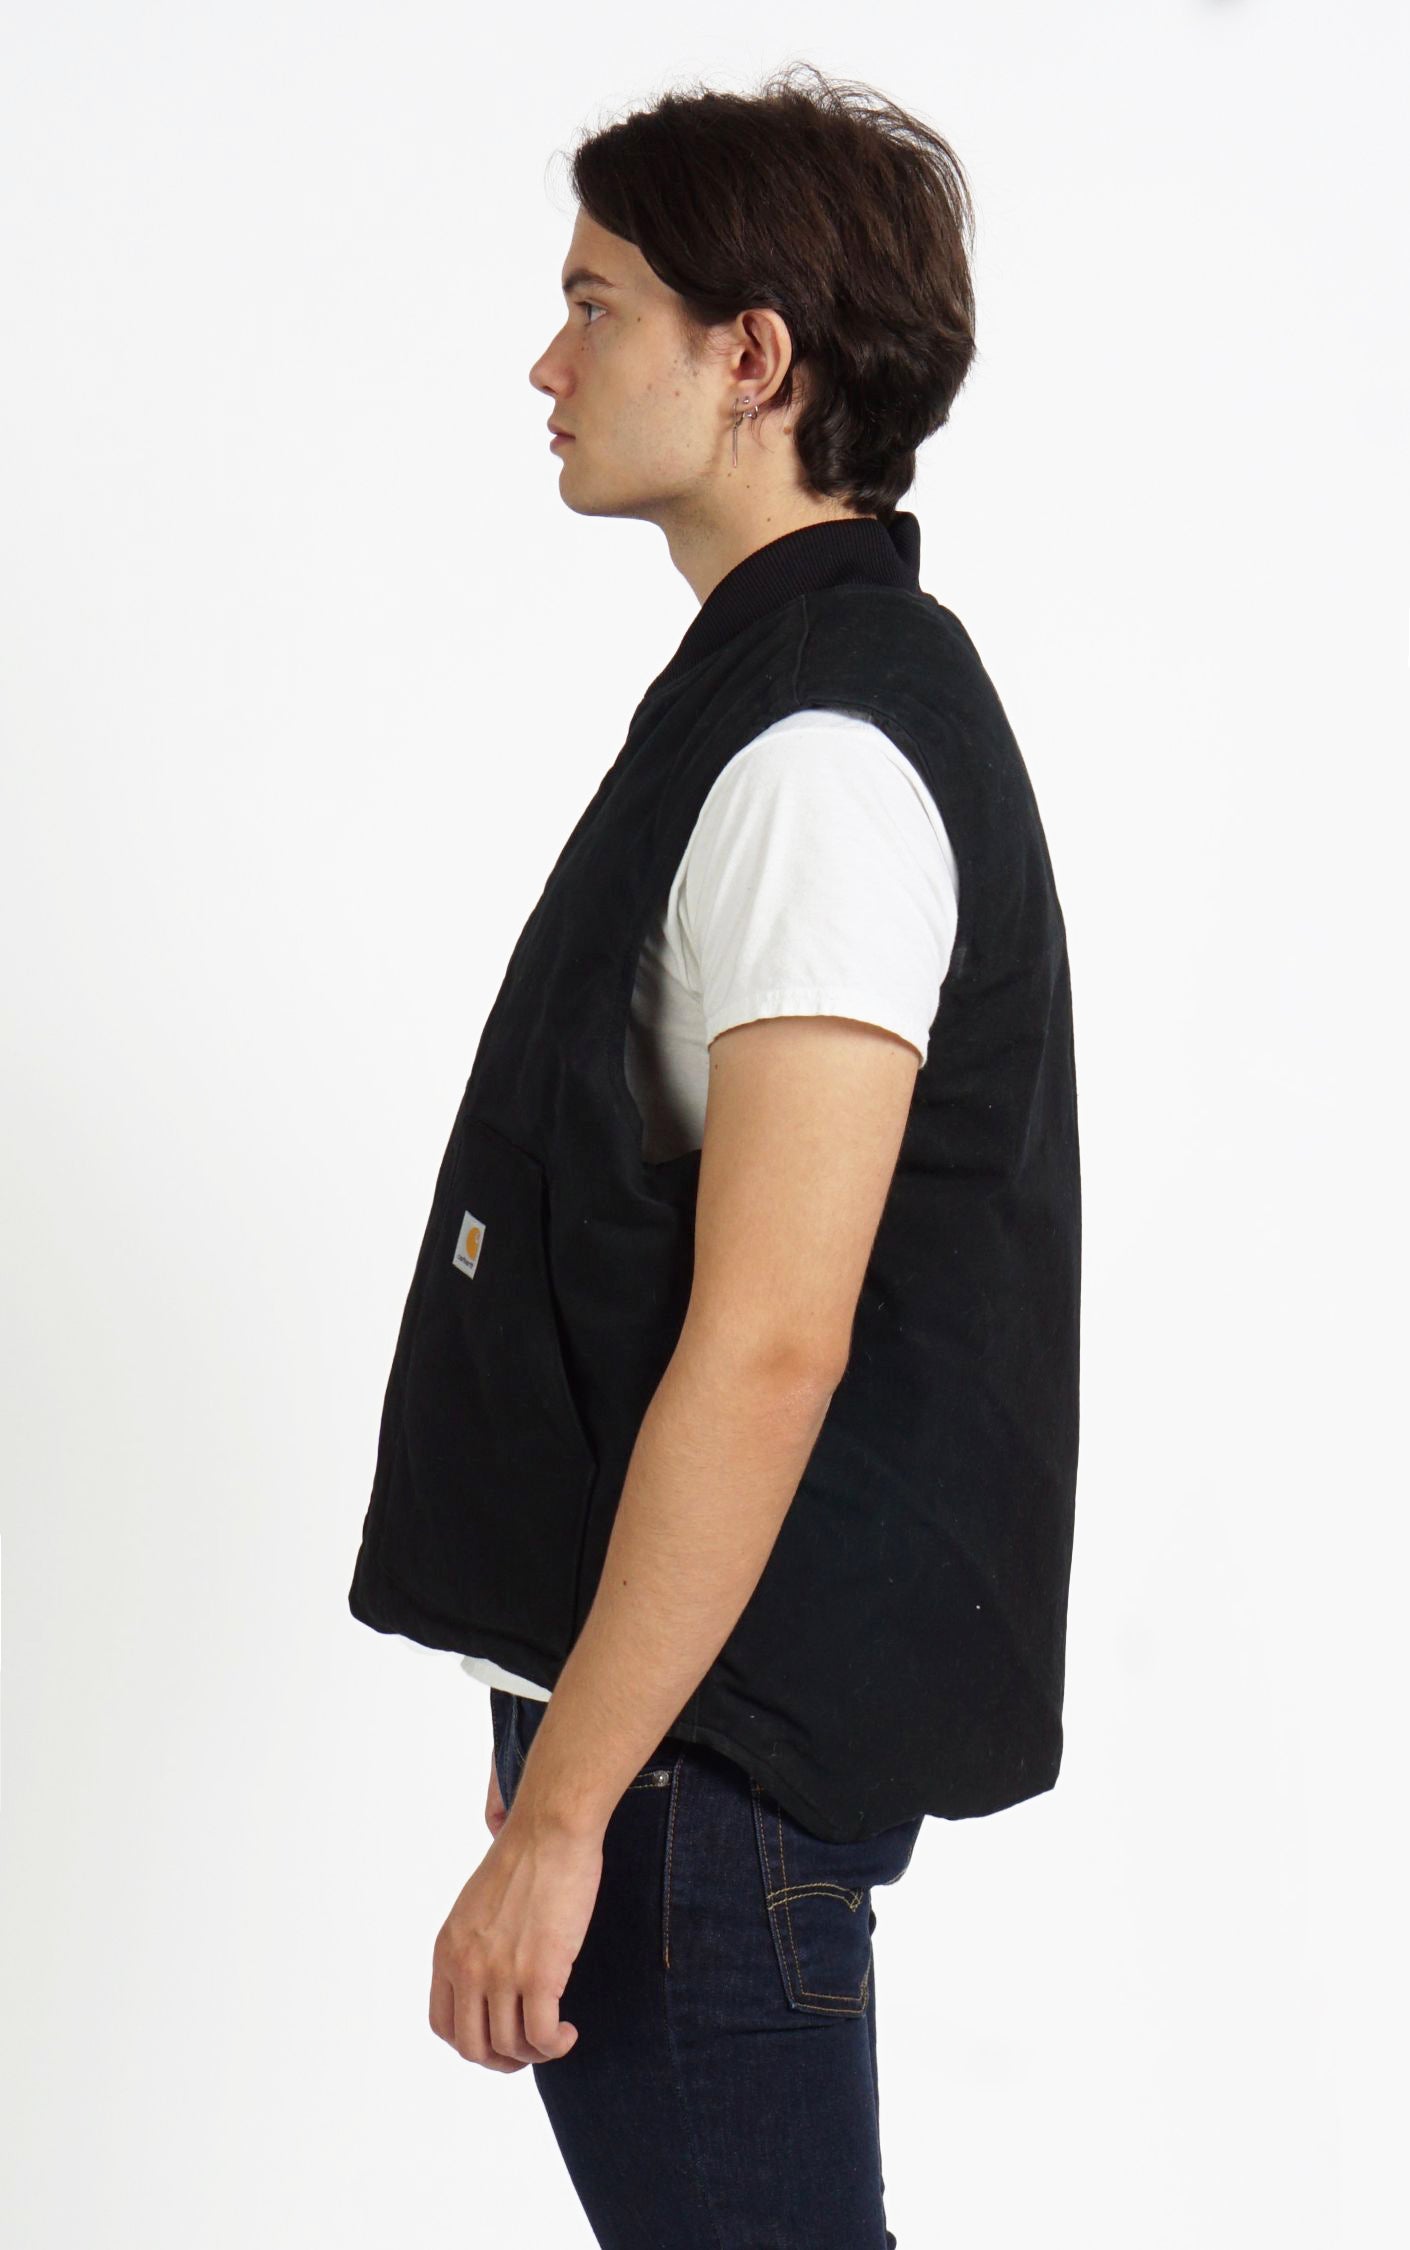 CARHARTT Logo Black Workwear Cotton Zip Up Vest resellum